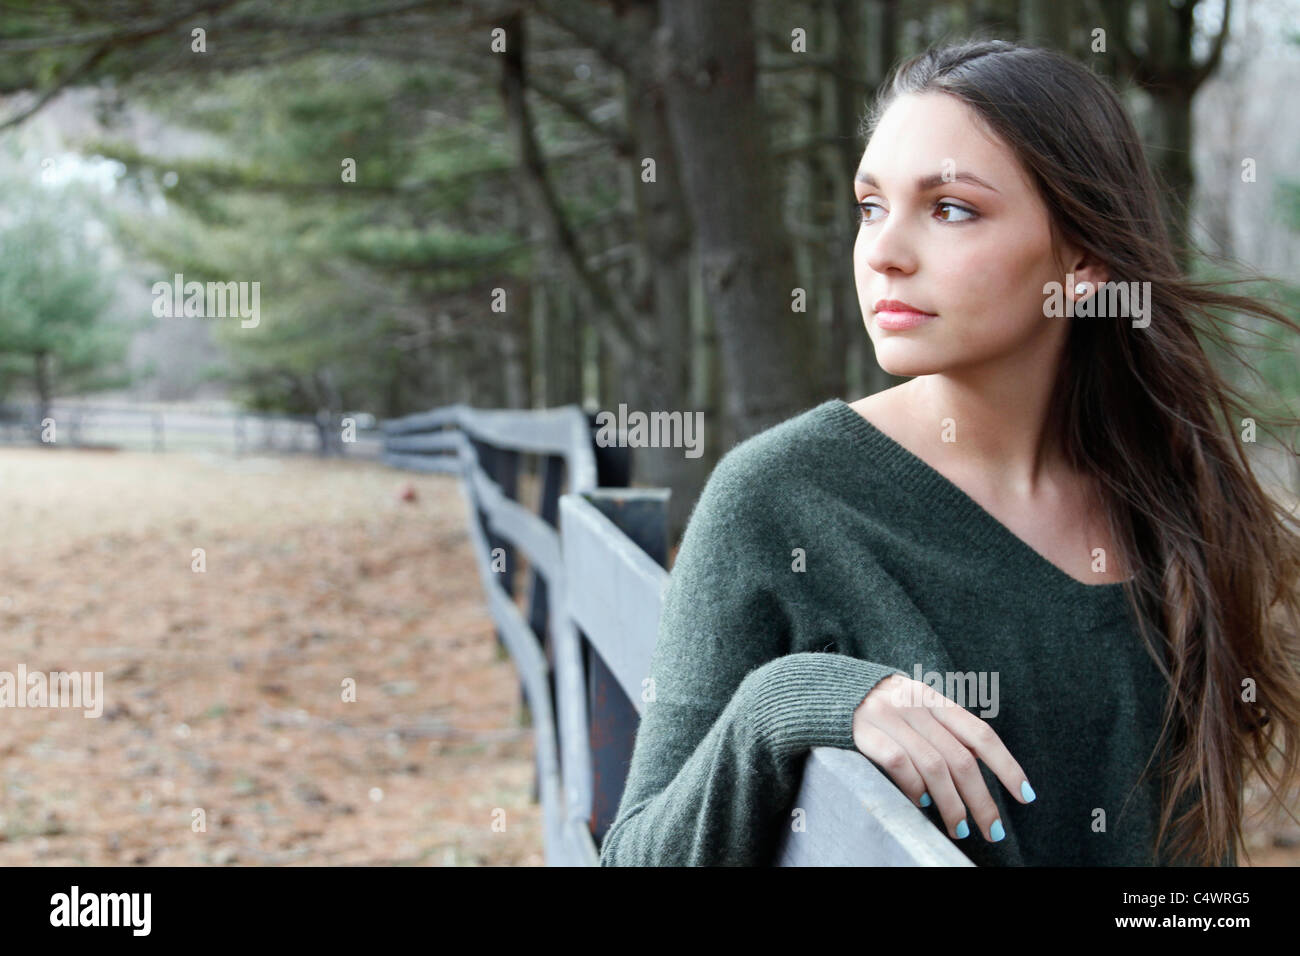 USA, New Jersey, Califon, Teenage girl (16-17) standing near fence and looking away, portrait Stock Photo